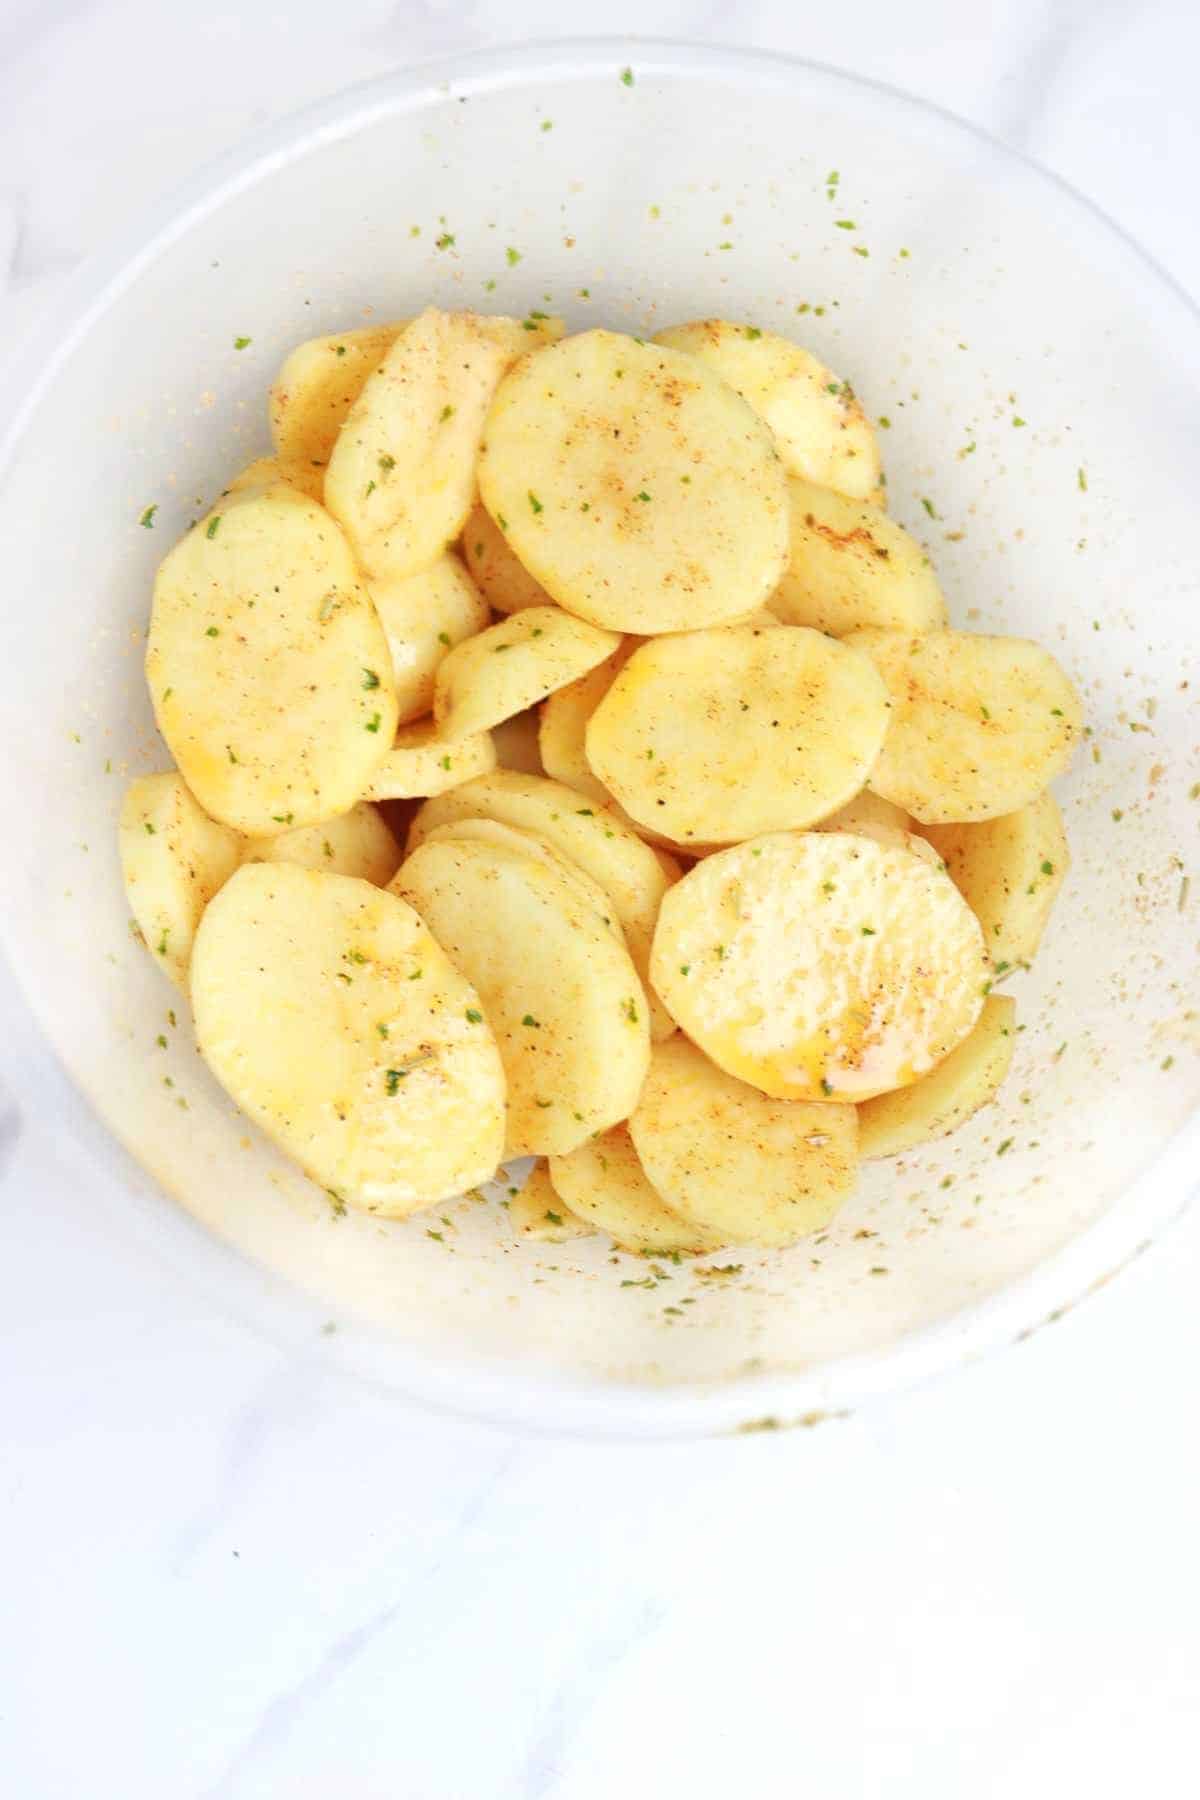 seasoned sliced potatoes in a bowl.